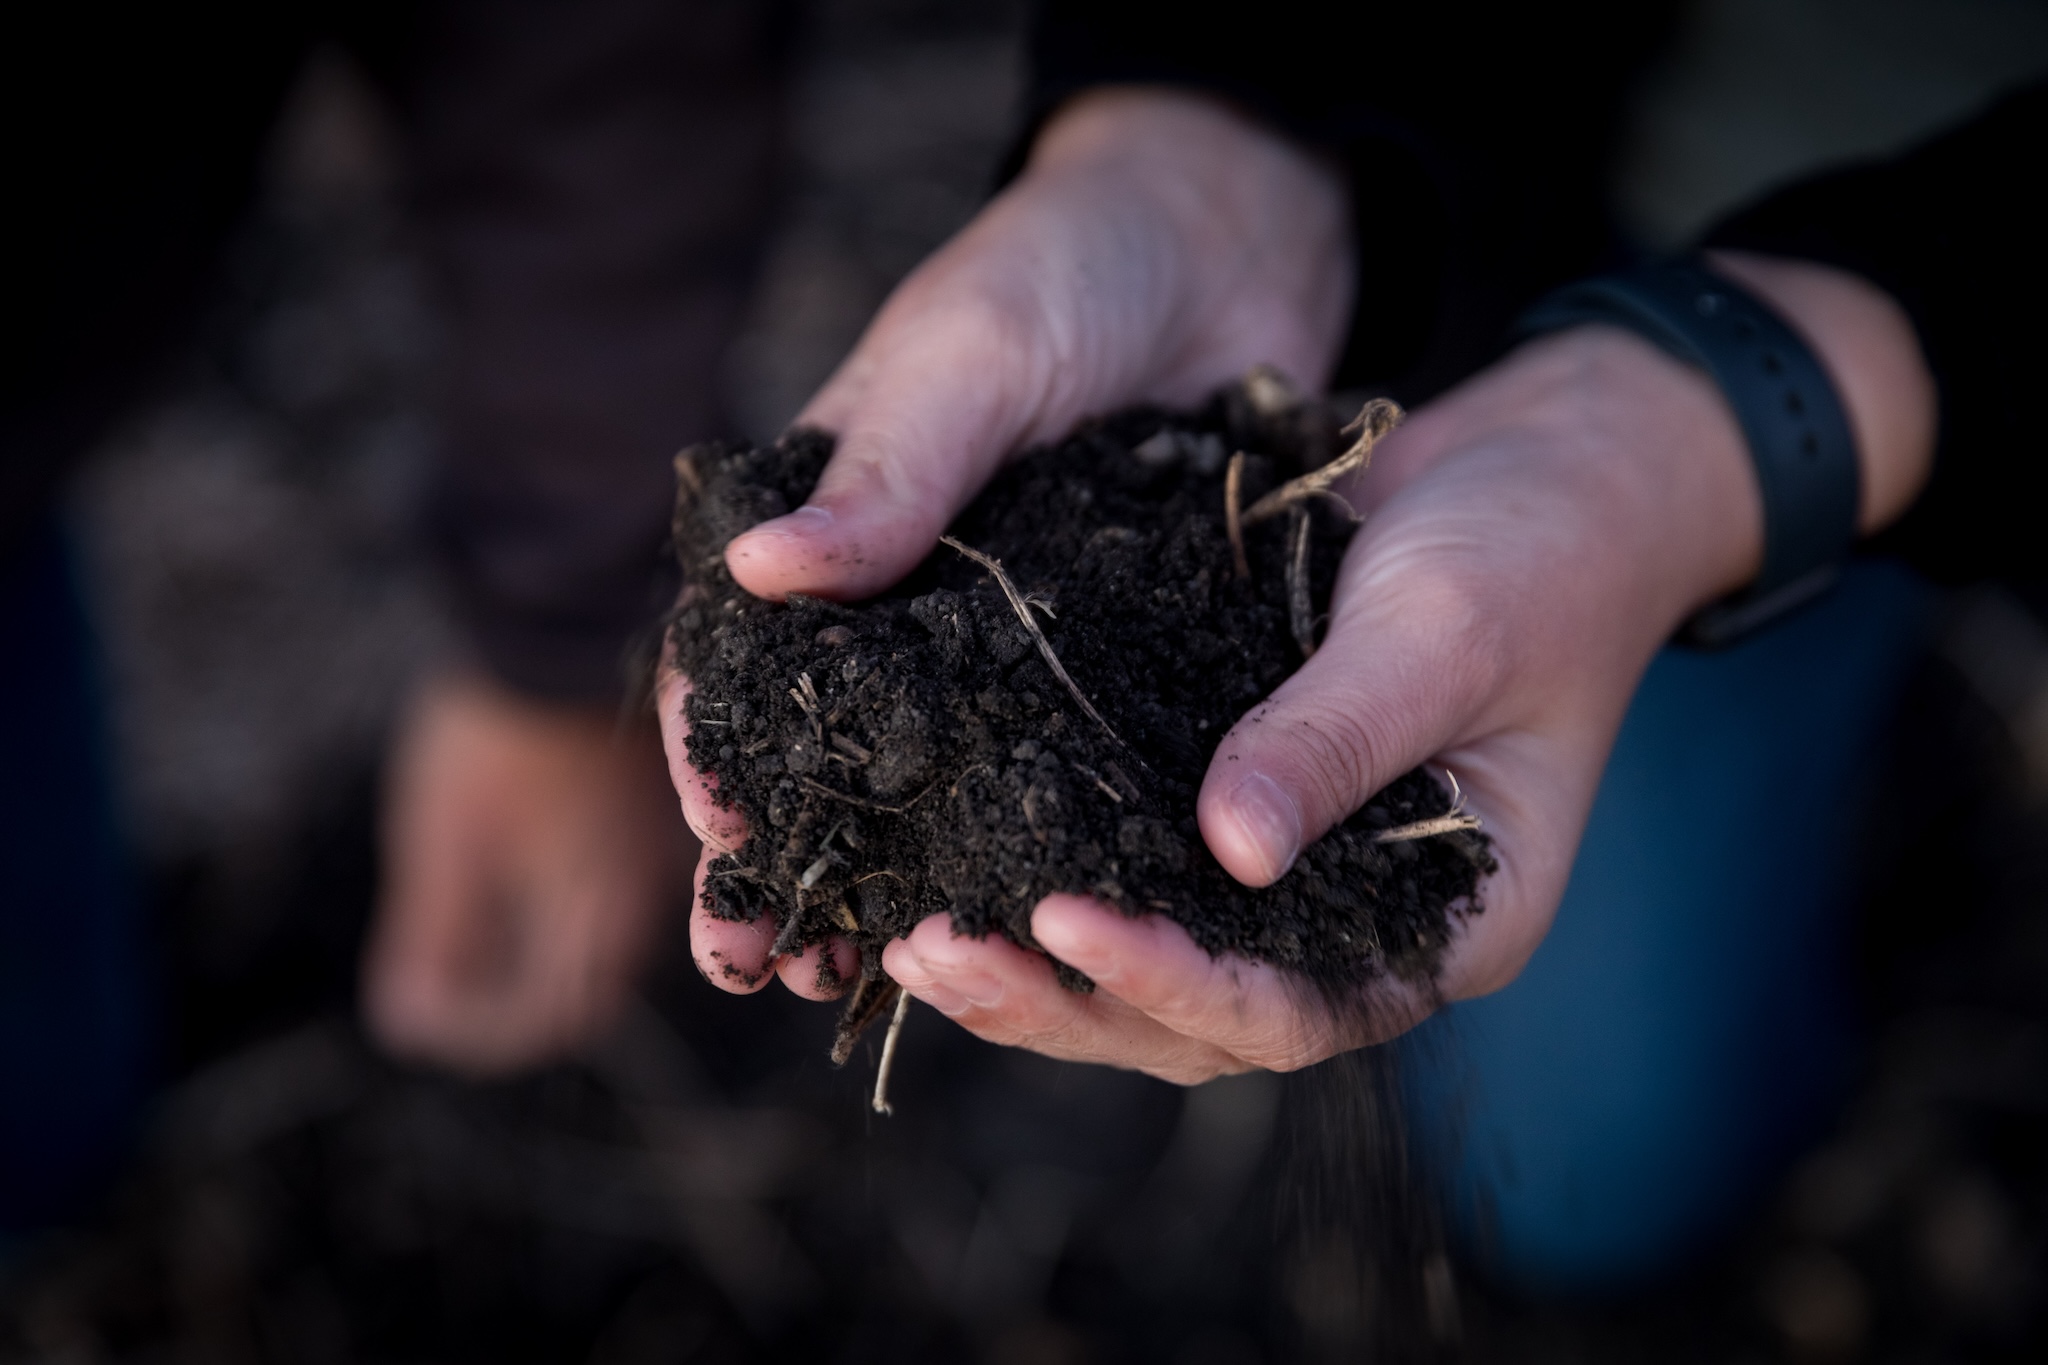 Hands scooping soil